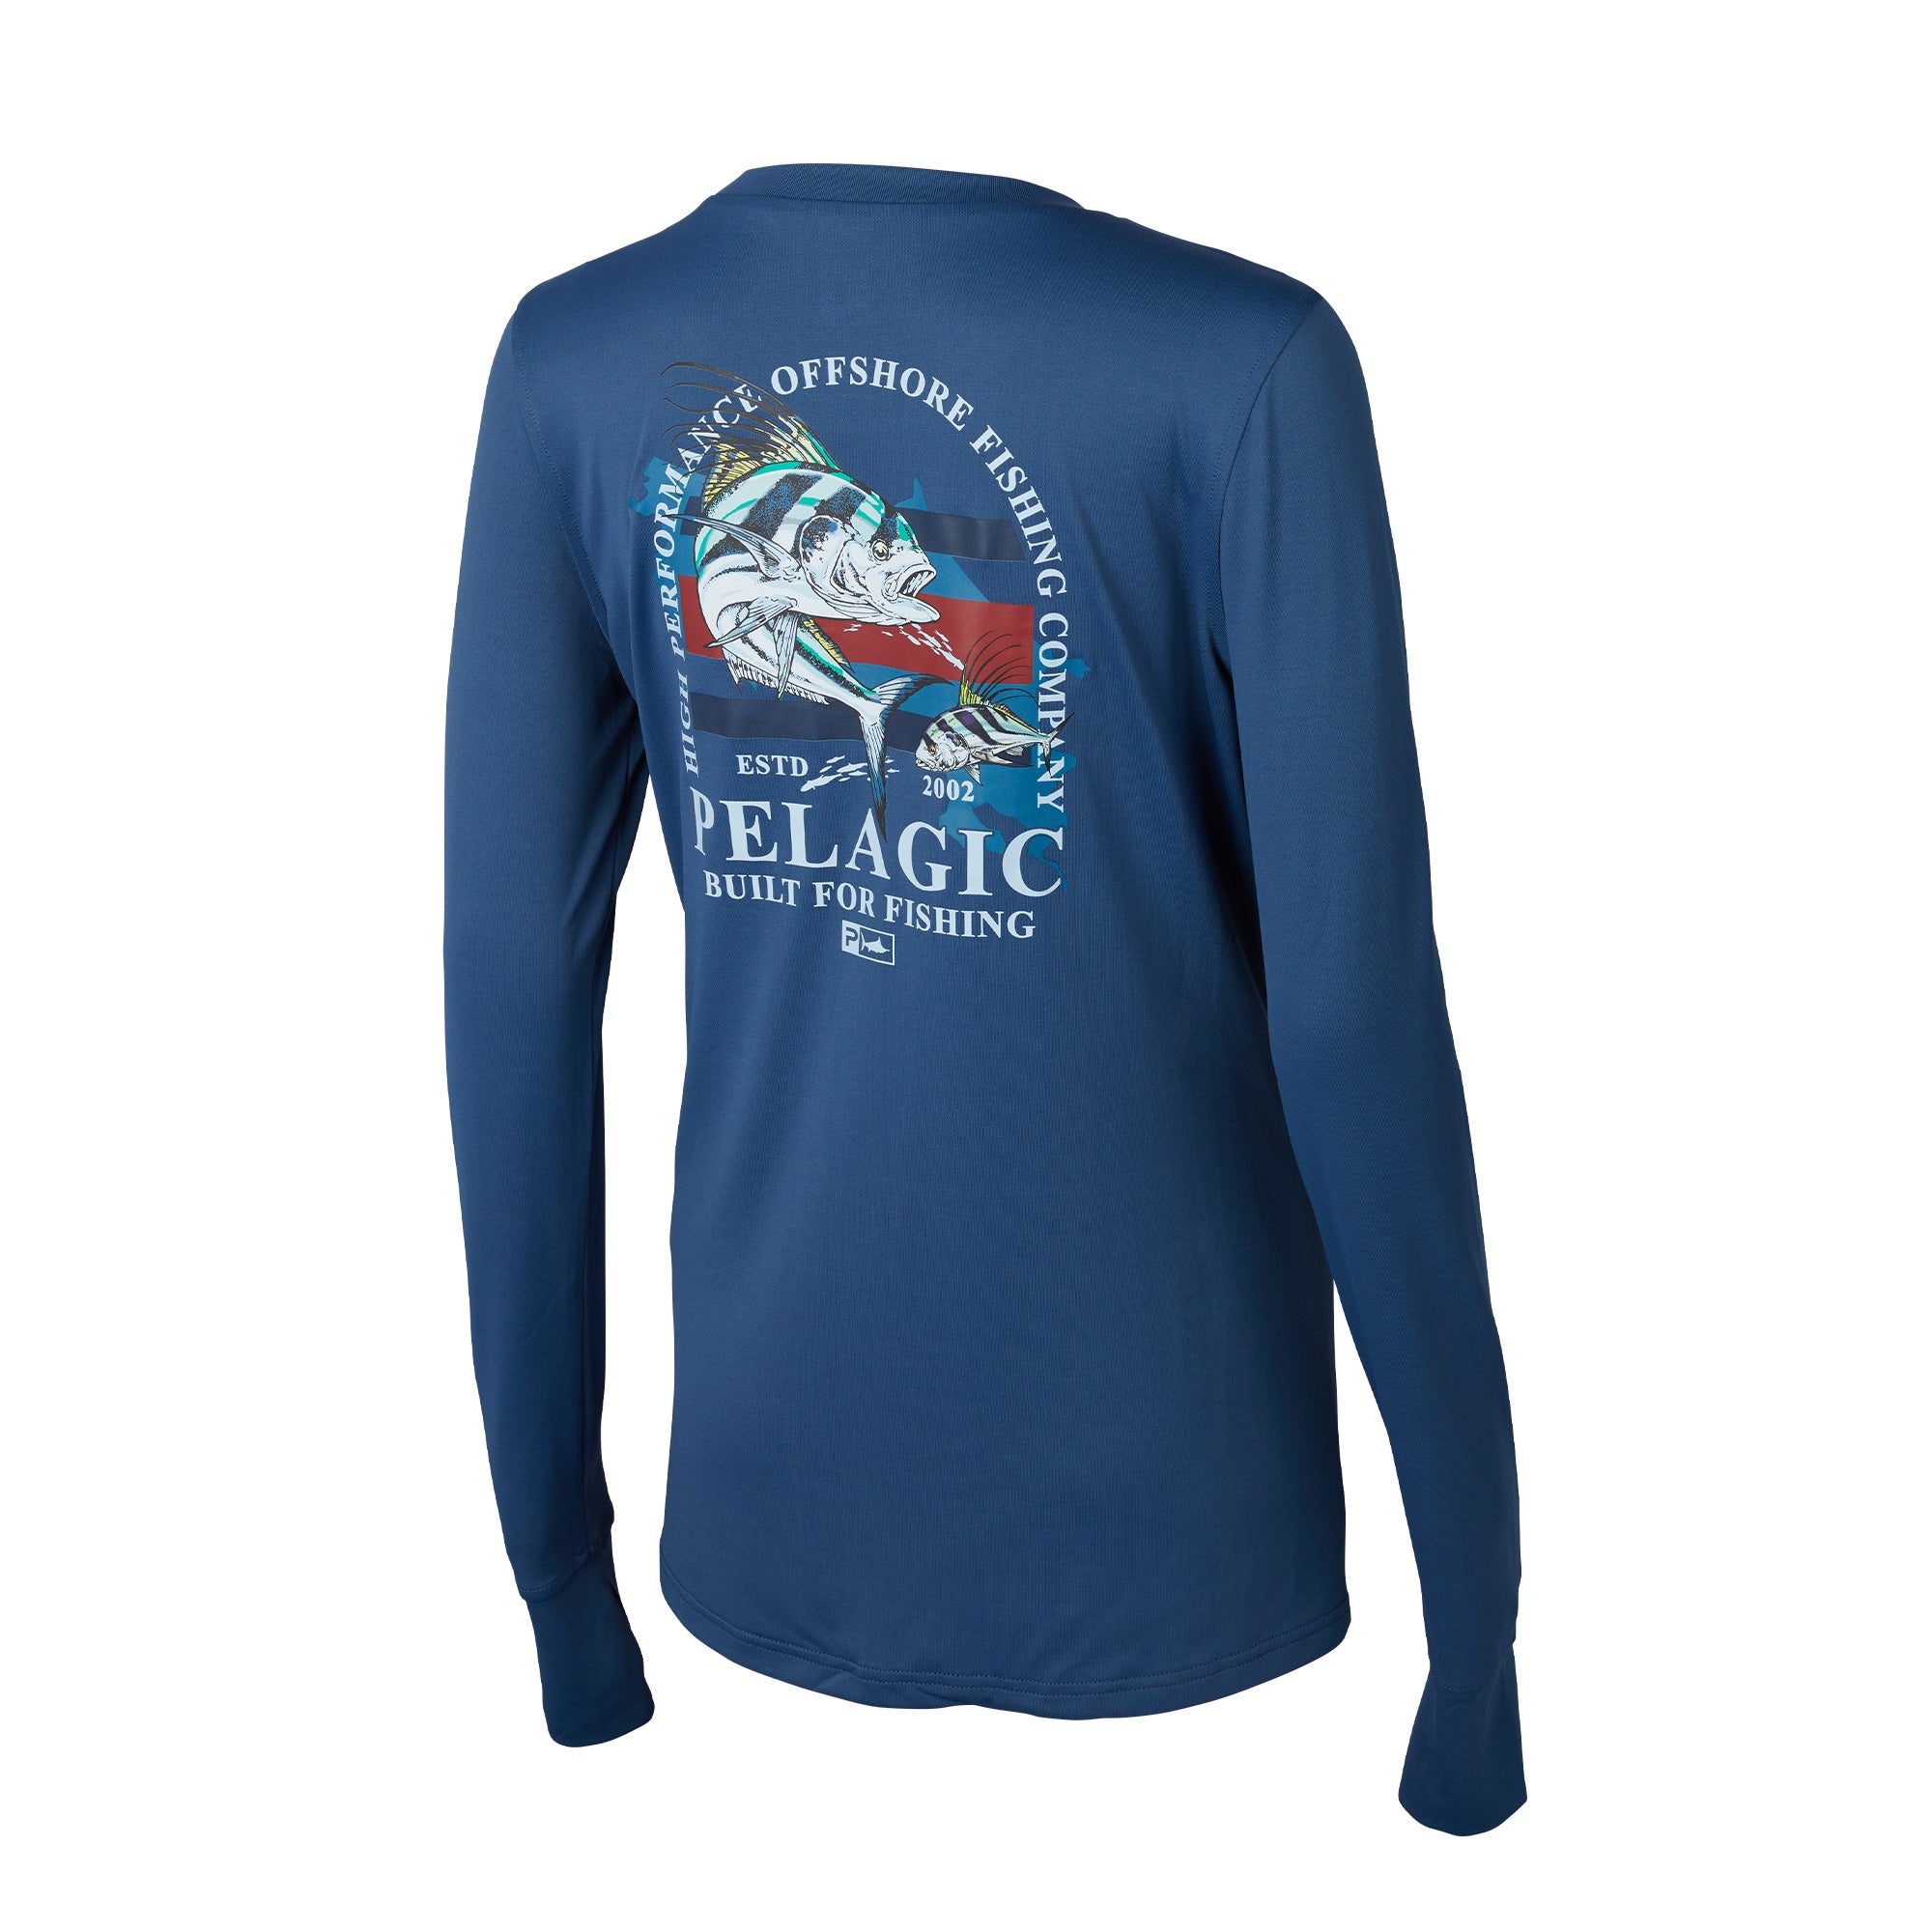 Simms Shirtpelagic Men's Uv Protection Fishing Shirt - Long